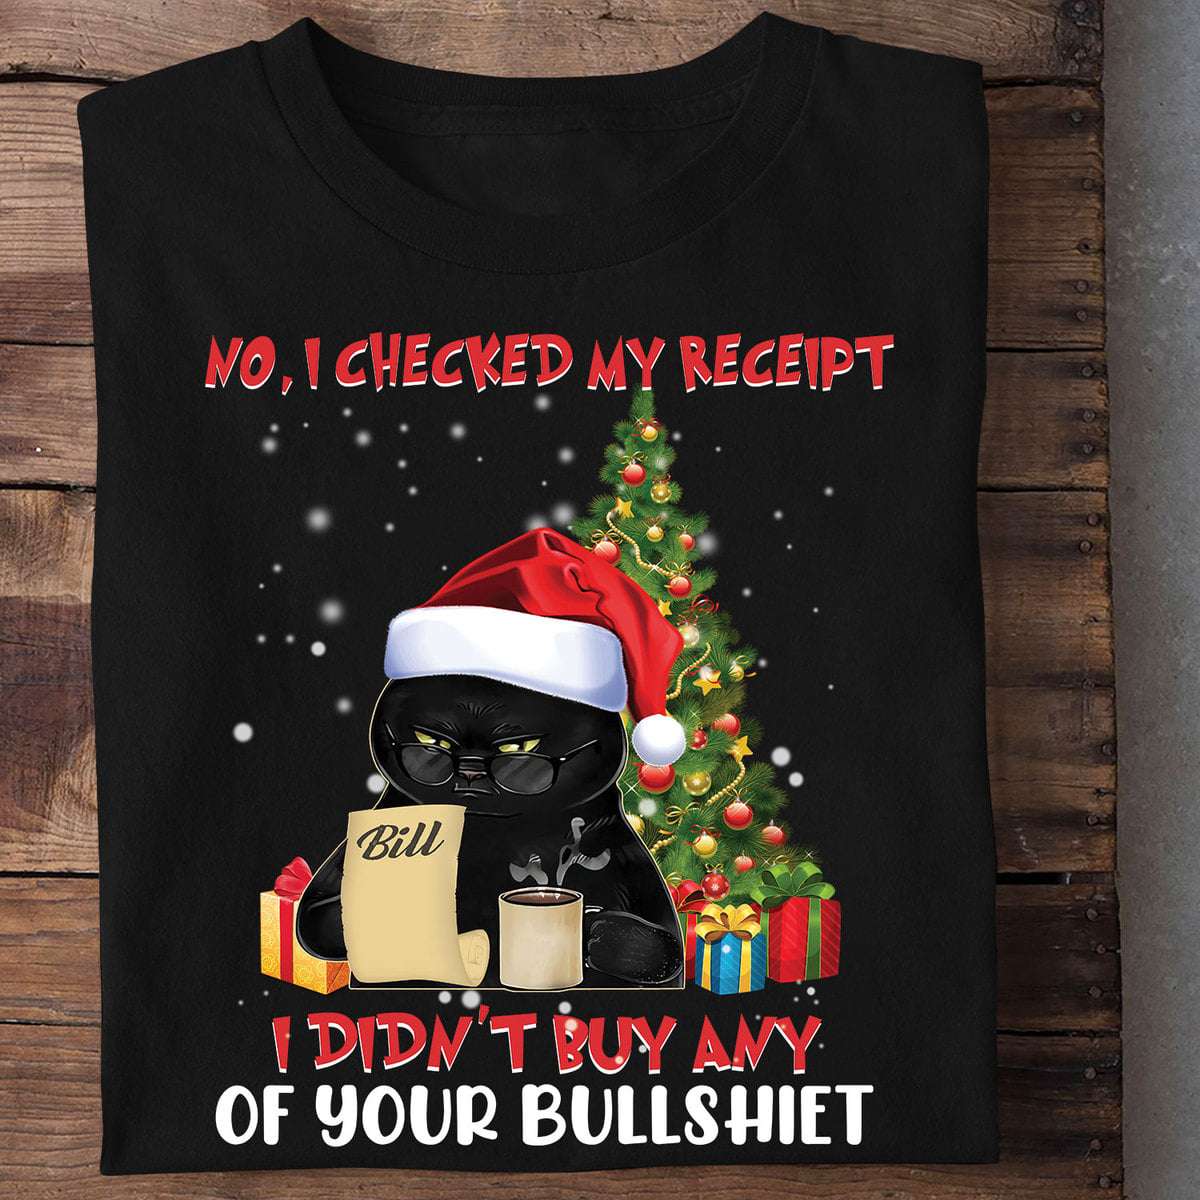 No, I checked my receipt I didn't buy any of your bullshiet - Christmas day gift, Christmas tree